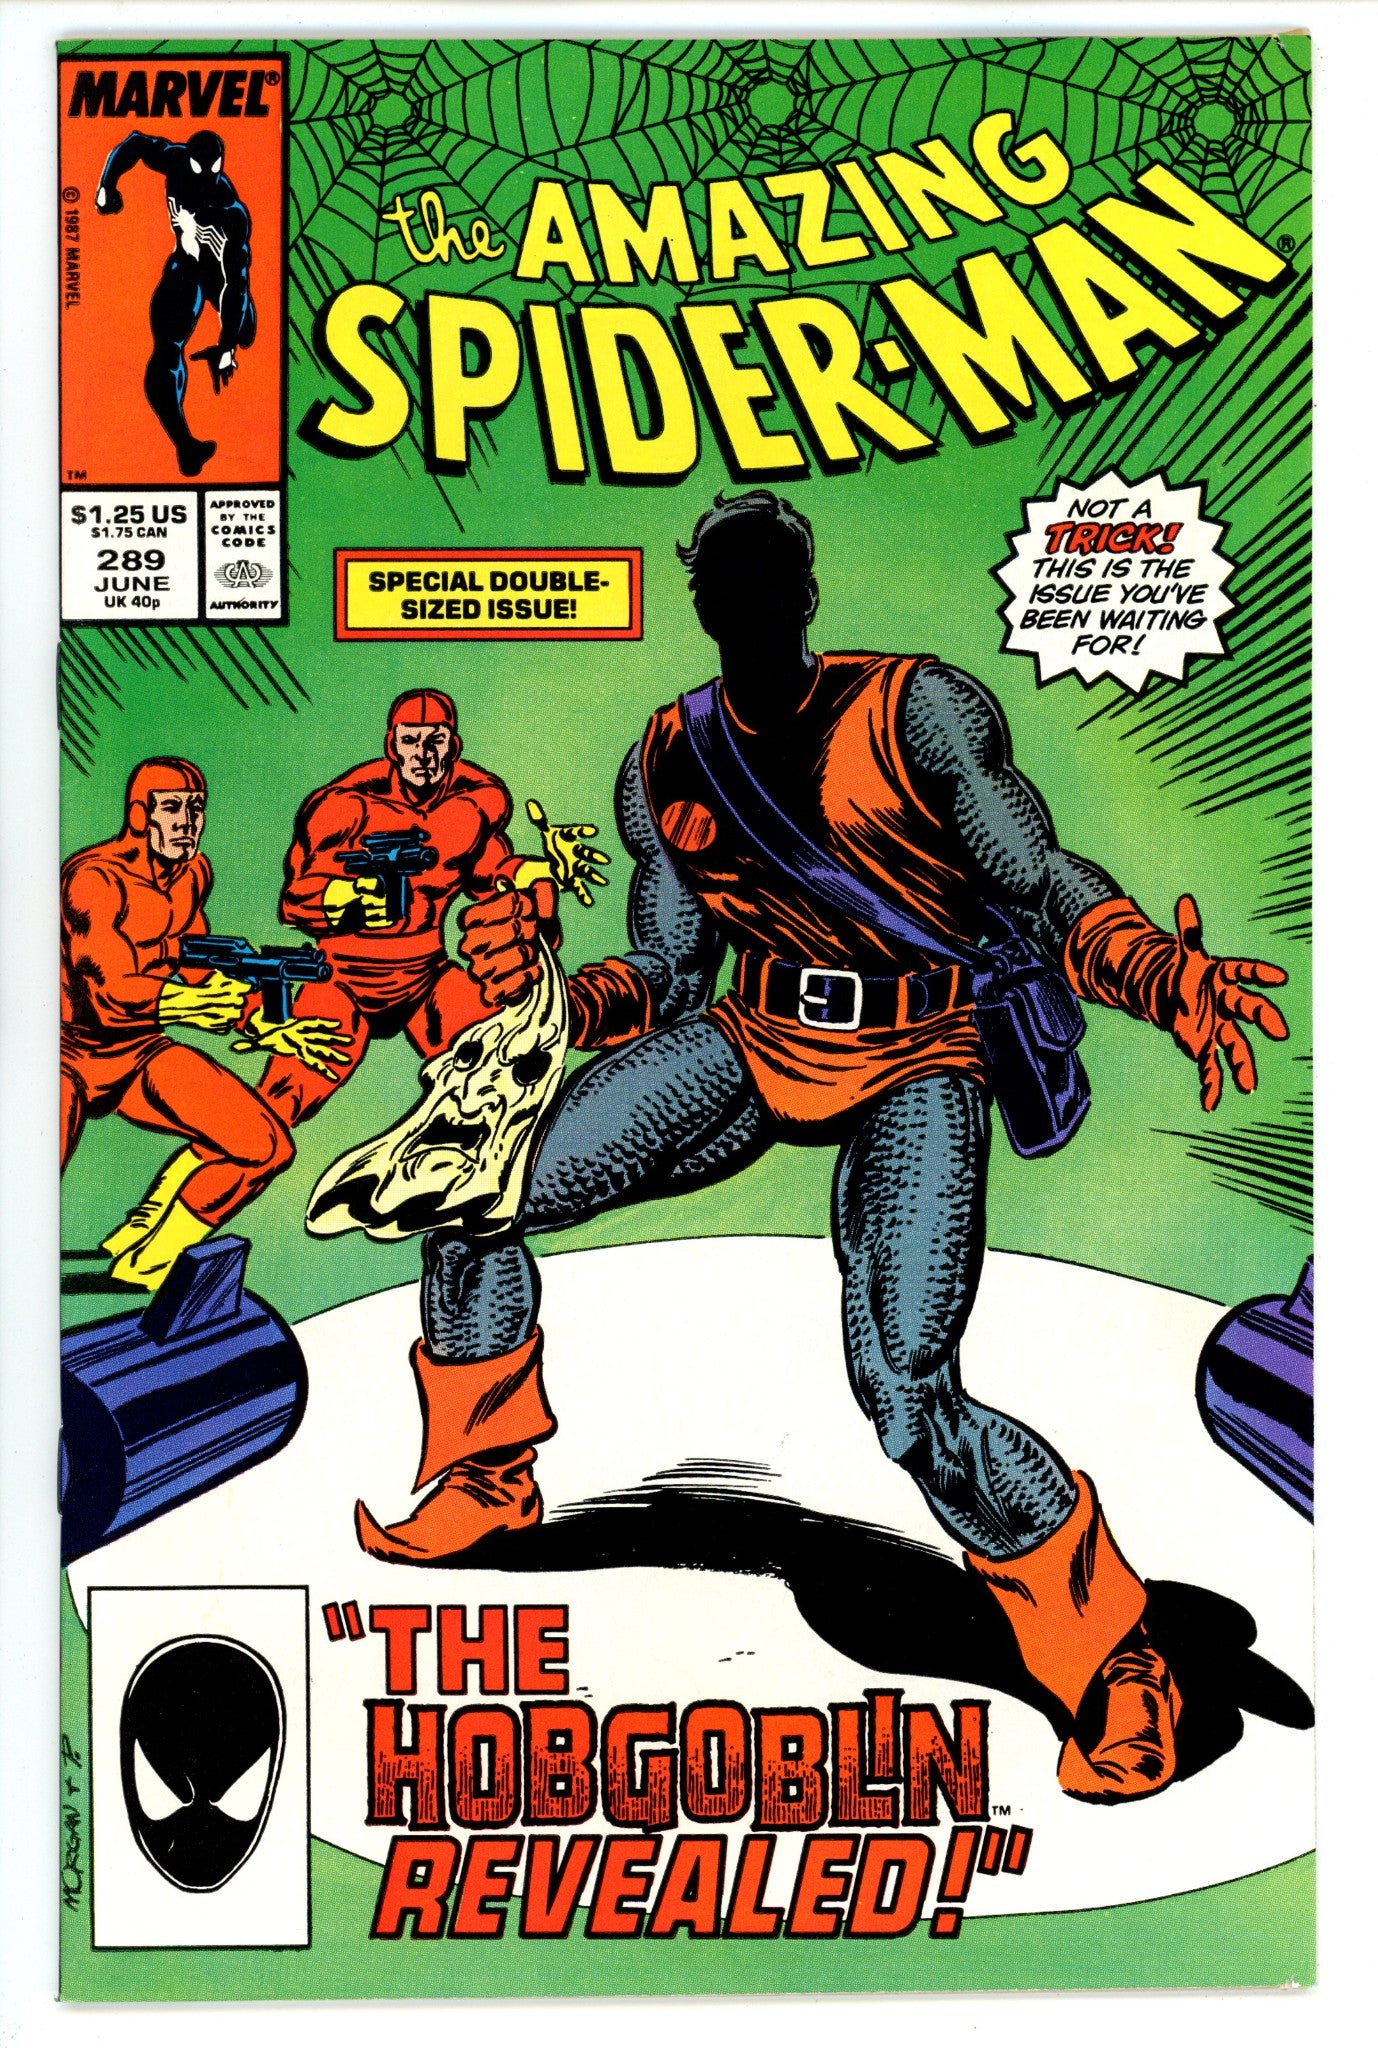 The Amazing Spider-Man Vol 1 289 VF/NM (9.0) (1987) 